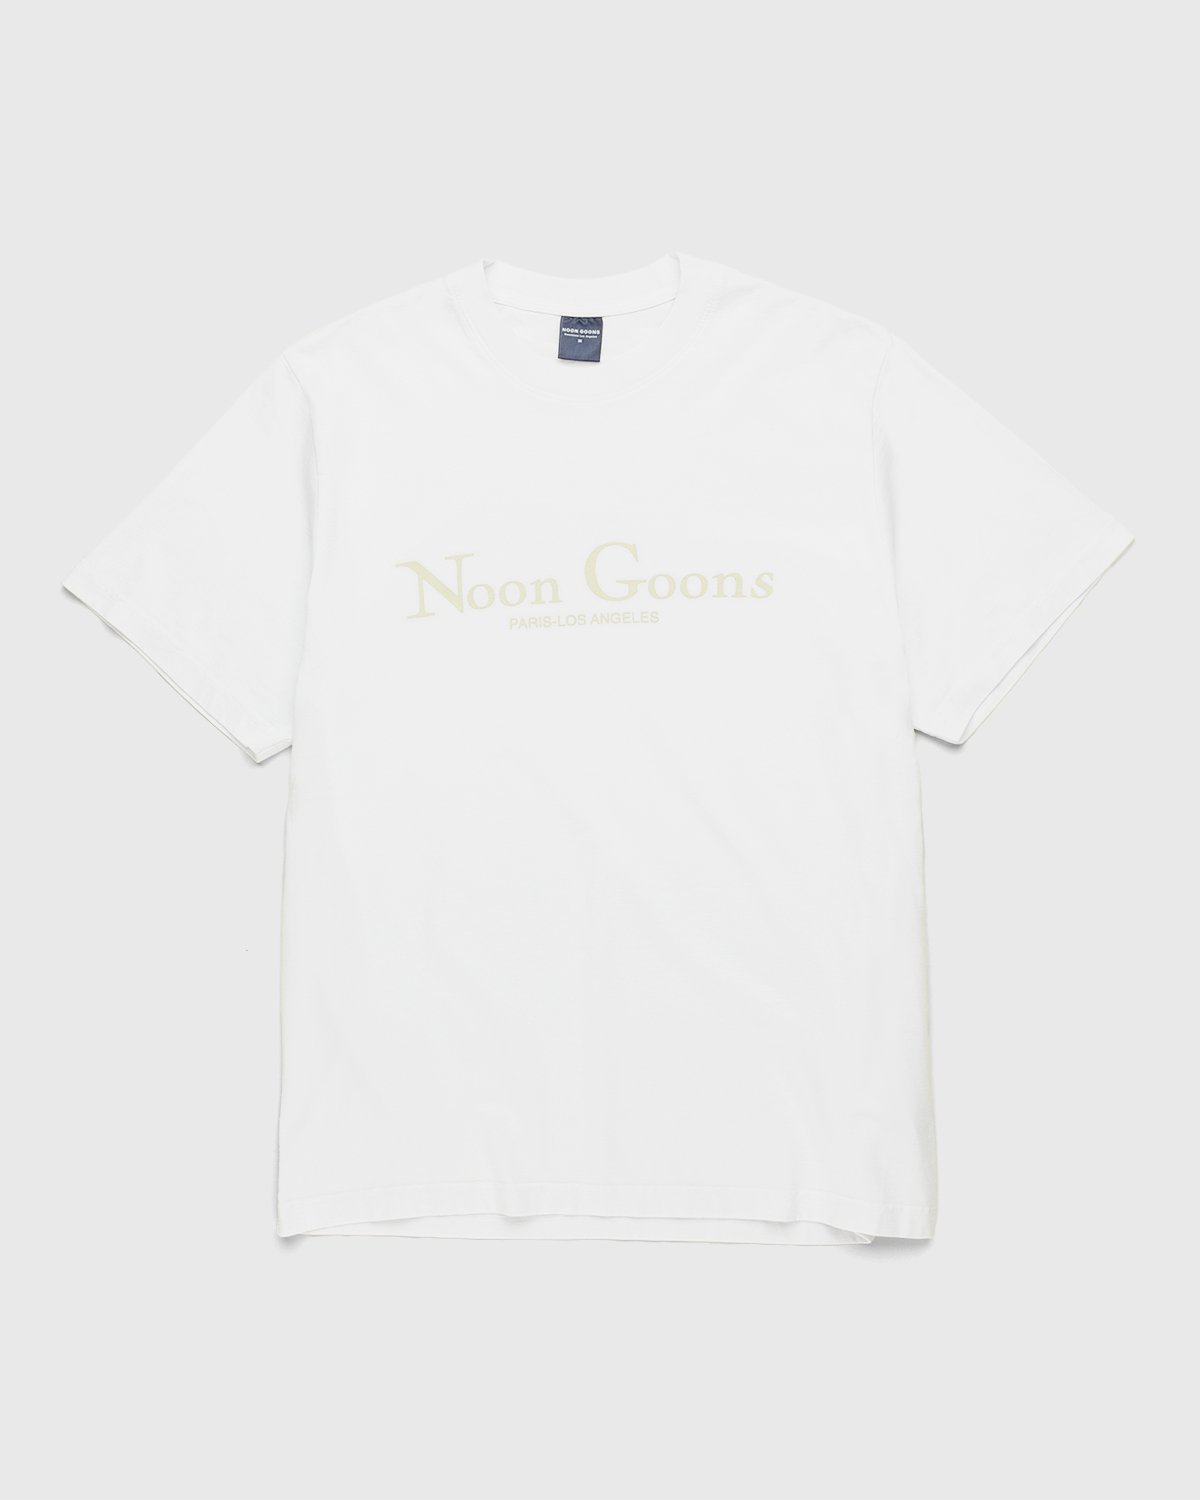 Noon Goons - Sister City T-Shirt White - Clothing - White - Image 1